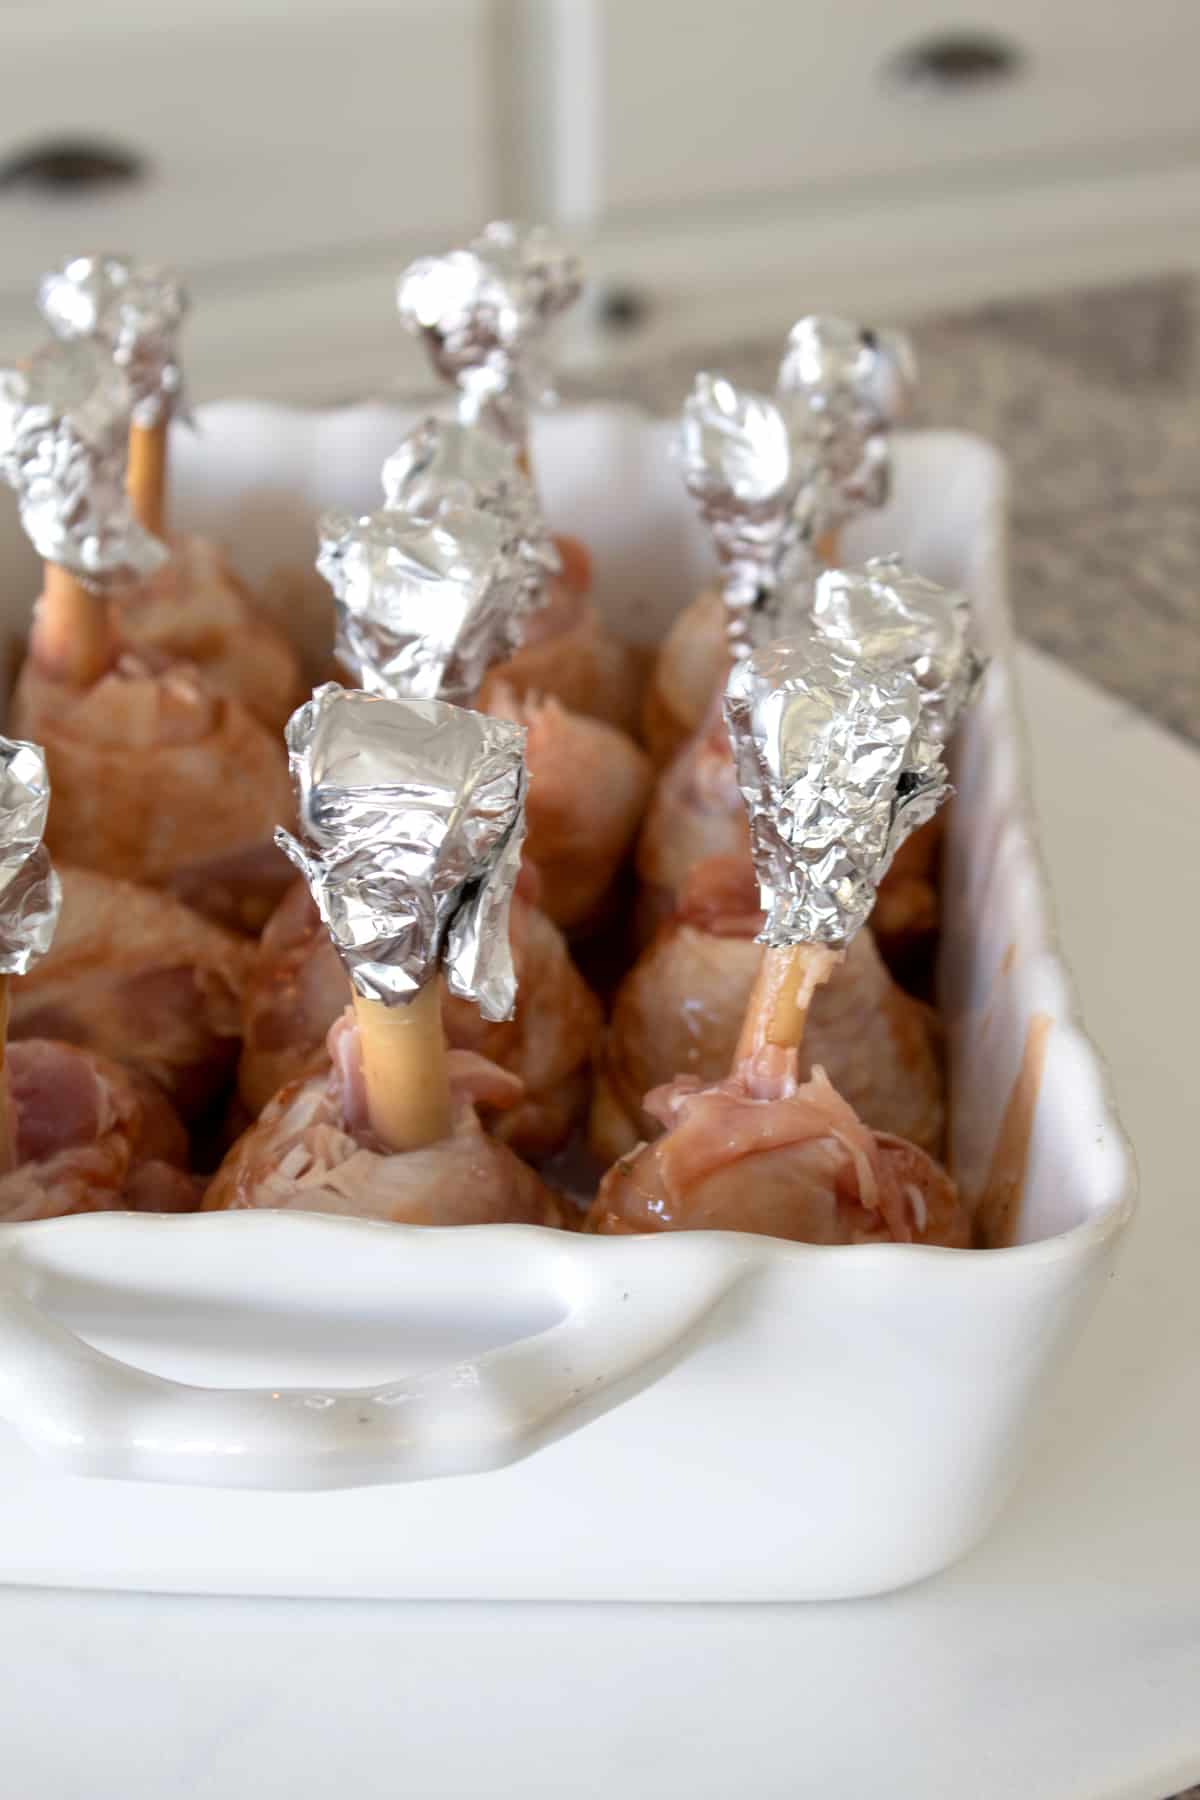 chicken lollipops marinating in a casserole dish